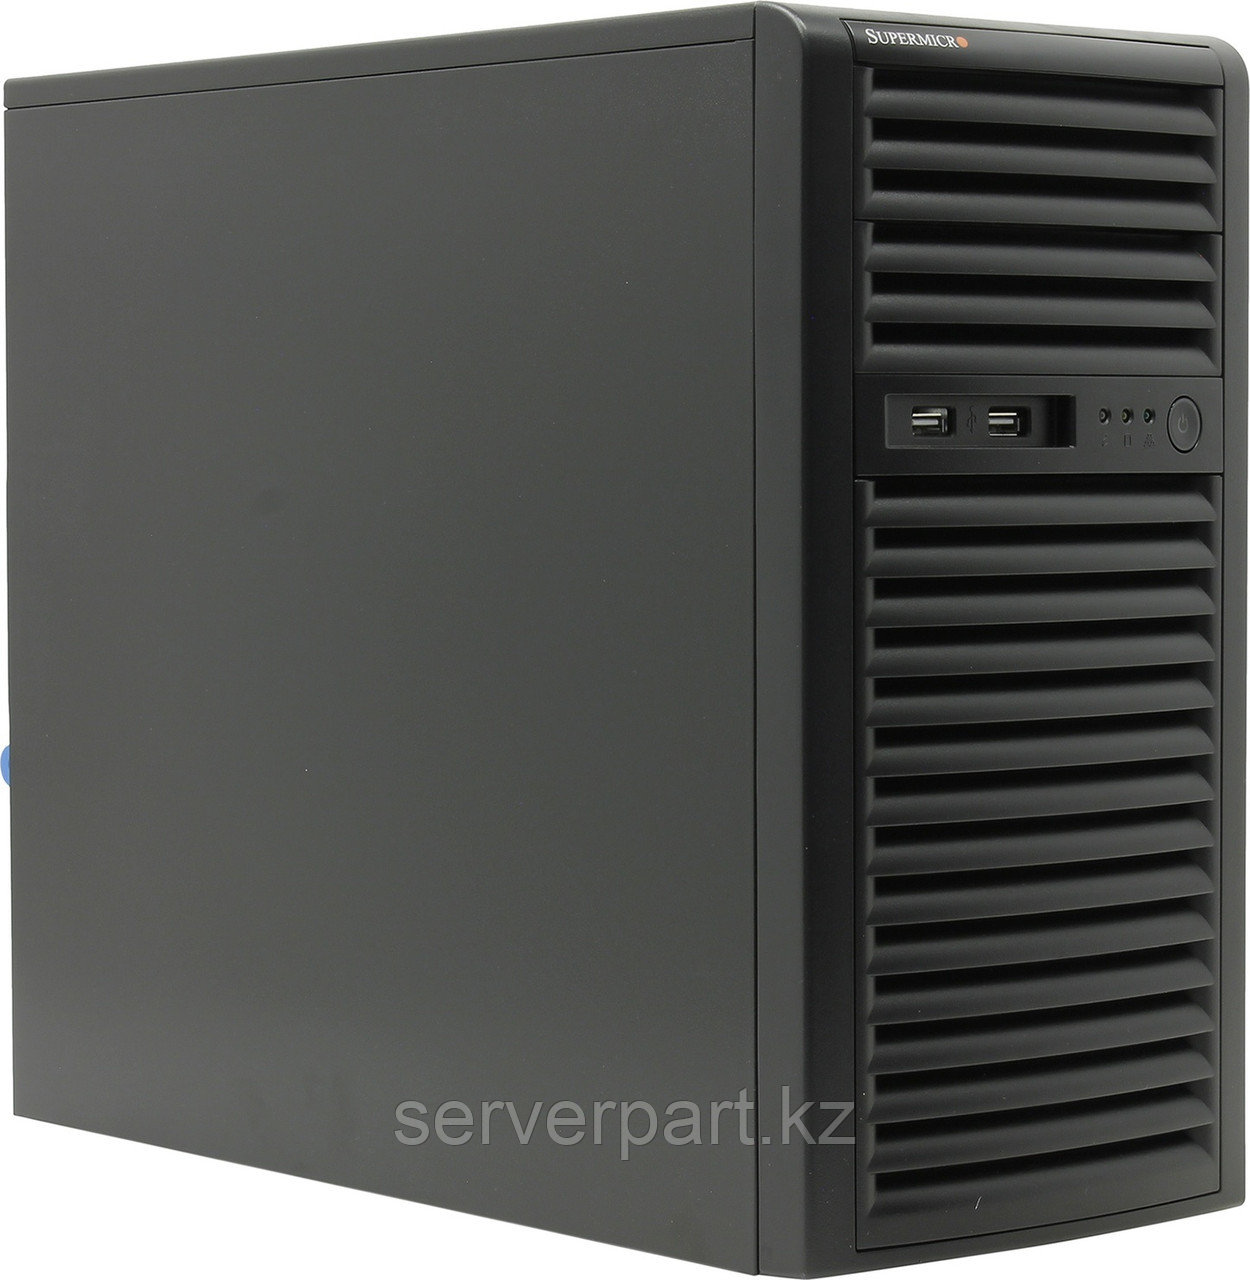 Сервер Supermicro SYS-5039D Tower 4LFF/4-core intel Xeon E3-1220v6 3GHz/48GB EUDIMM/2x480GB SSD RI Hyb, фото 1